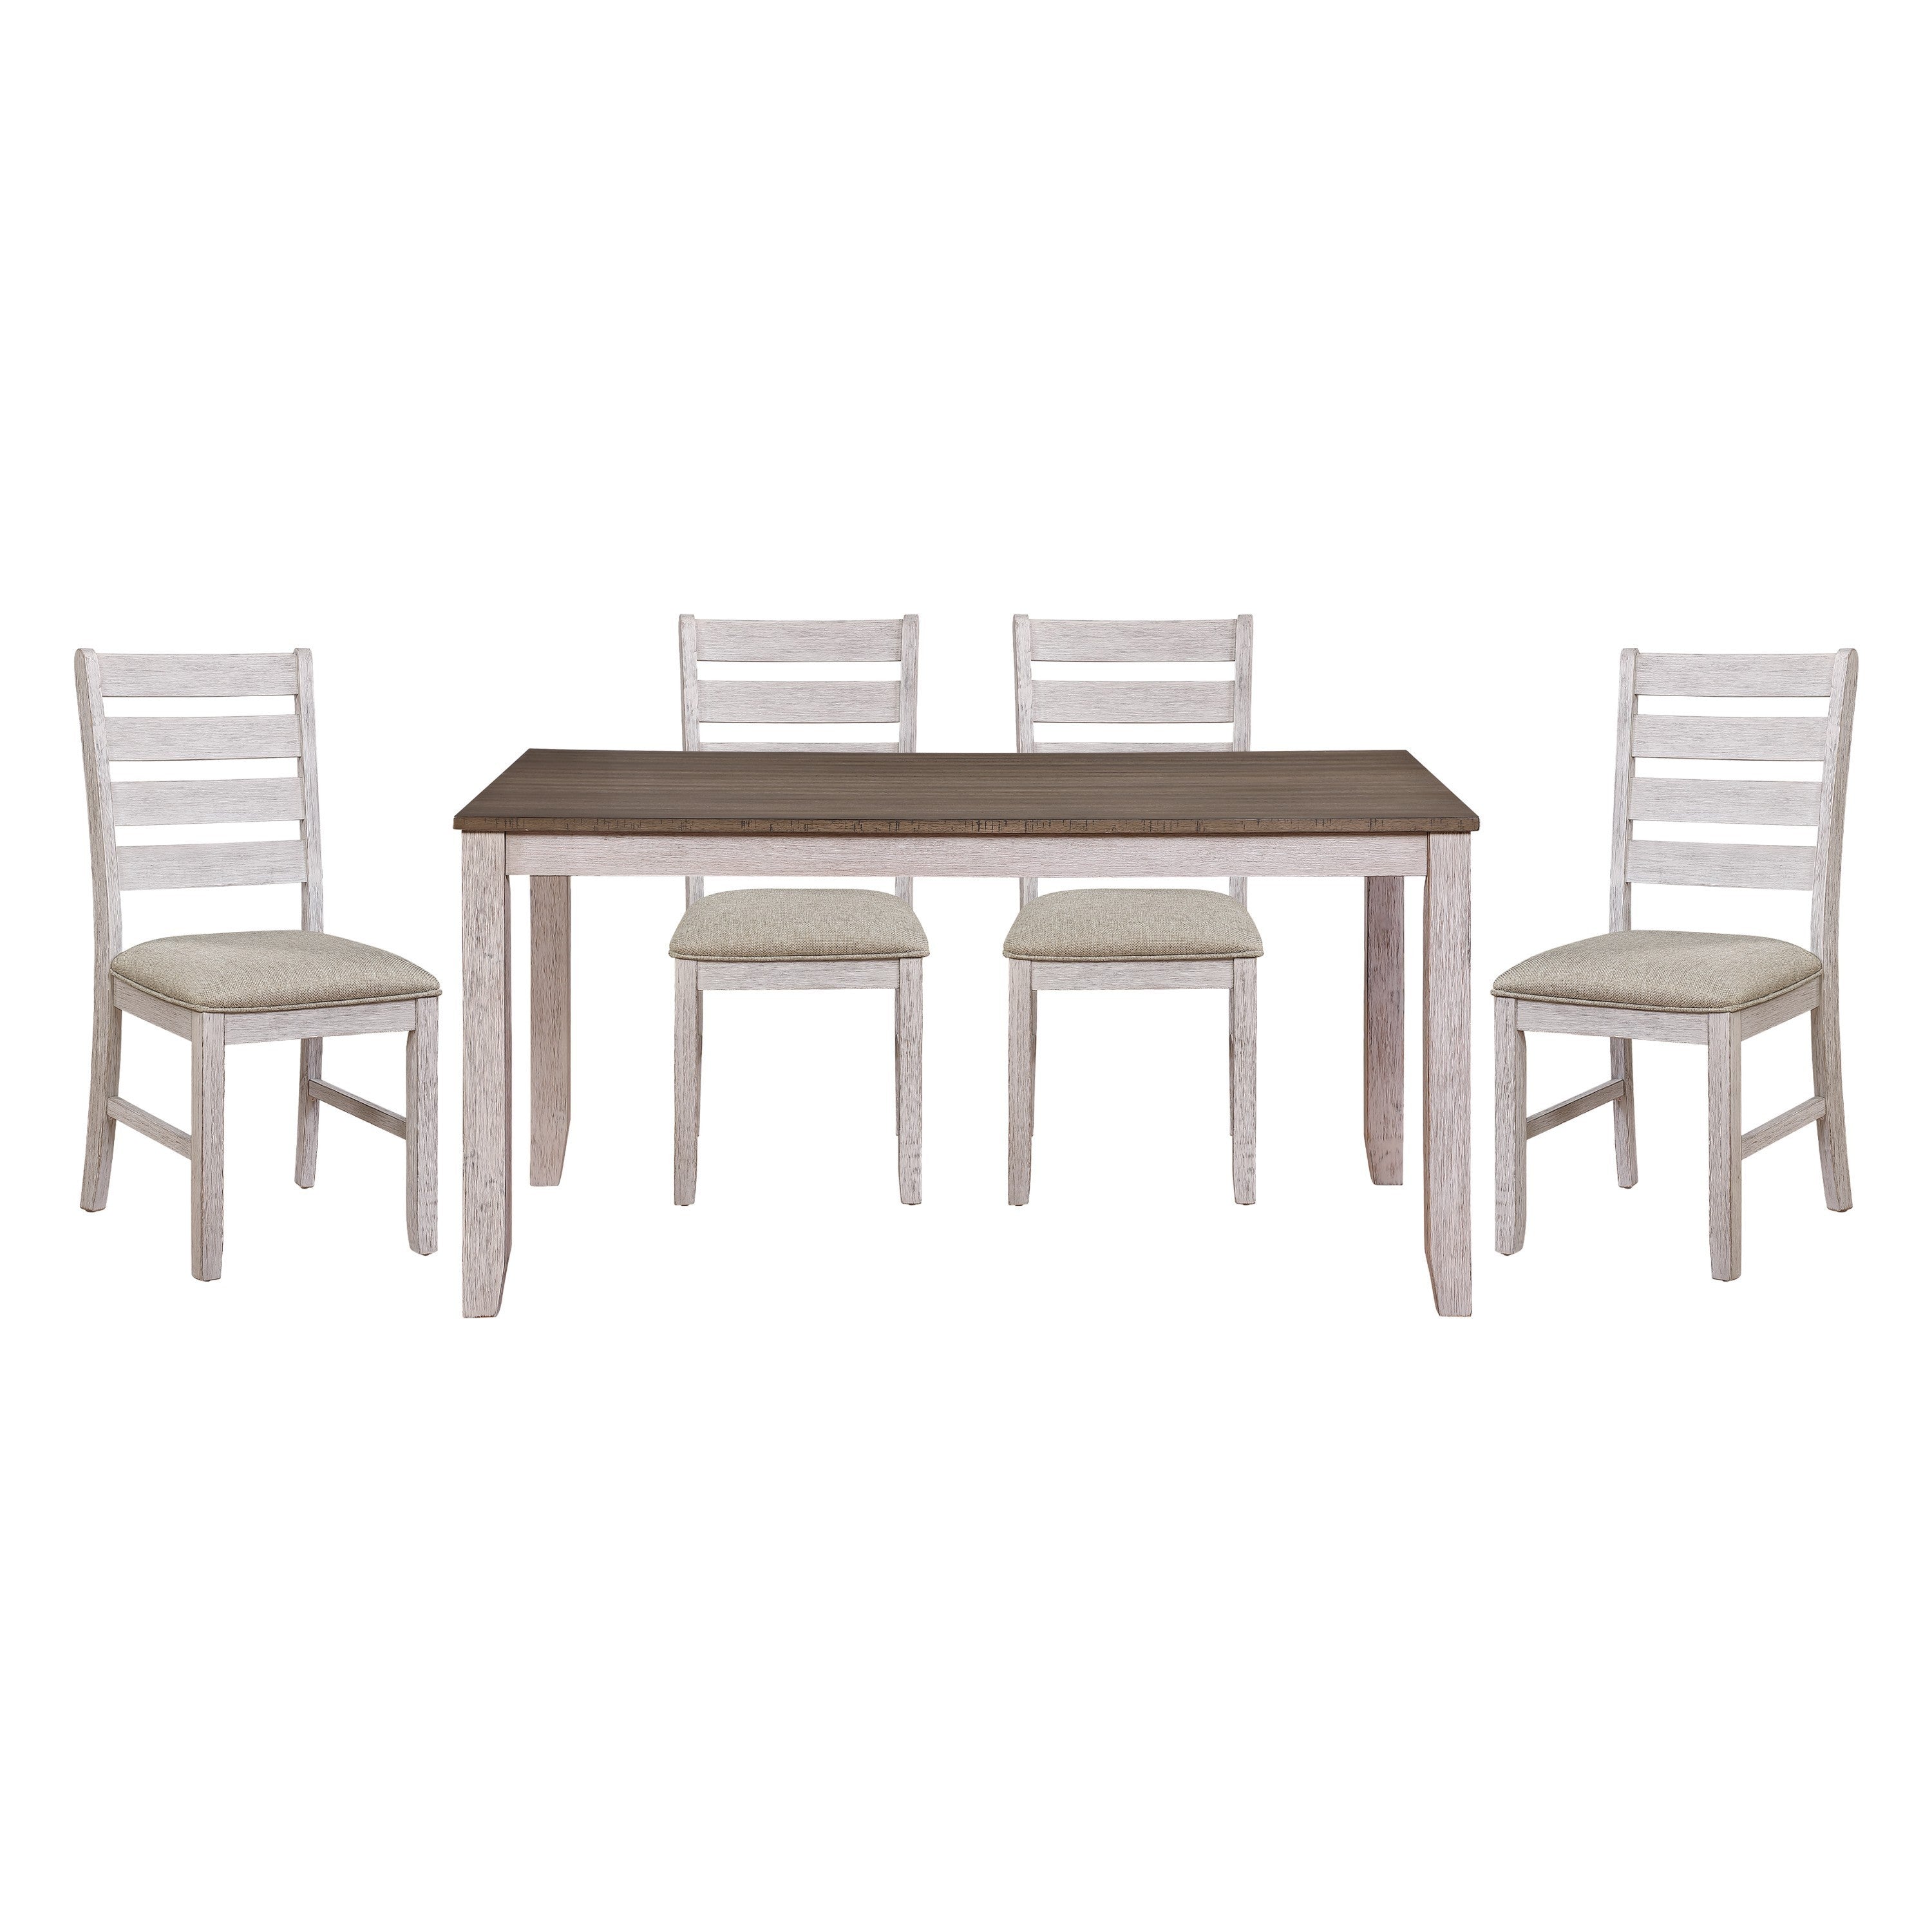 Design Rectangular 1pc Dining Table Grayish White and Brown Finish Furniture